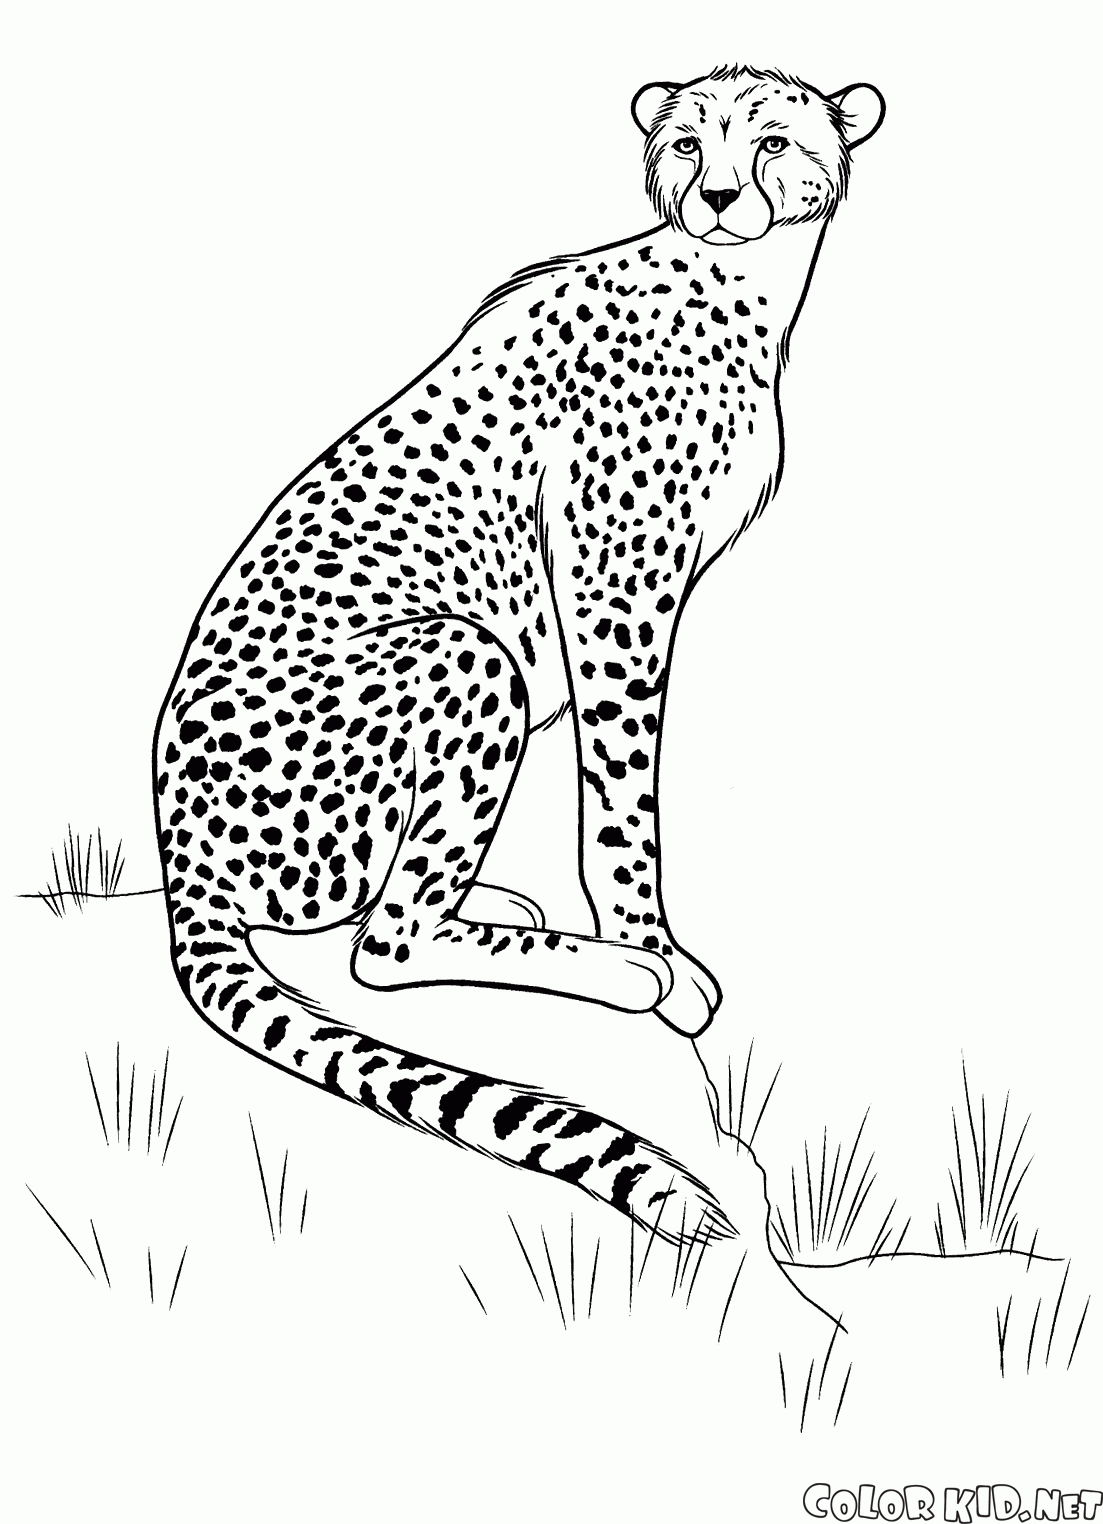 Cheetah na polowania